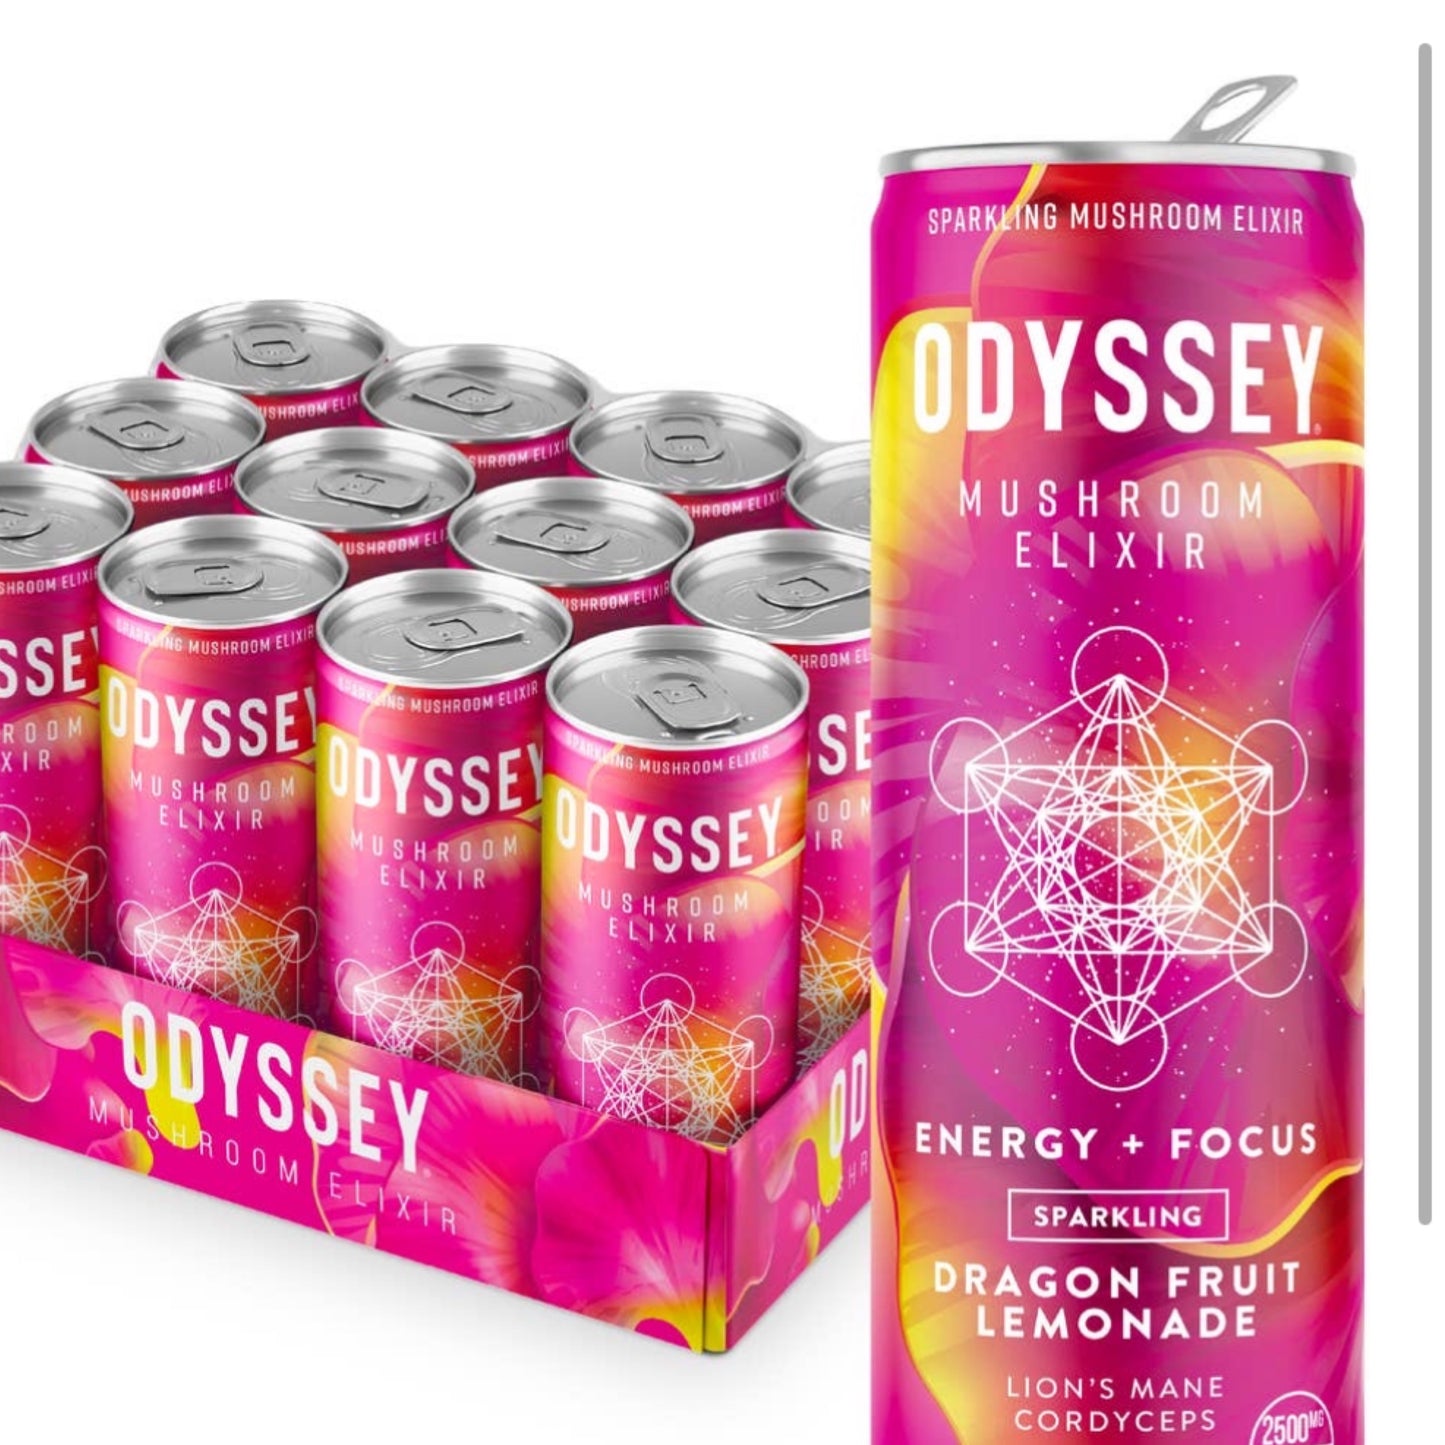 Odyssey Mushroom Elixir